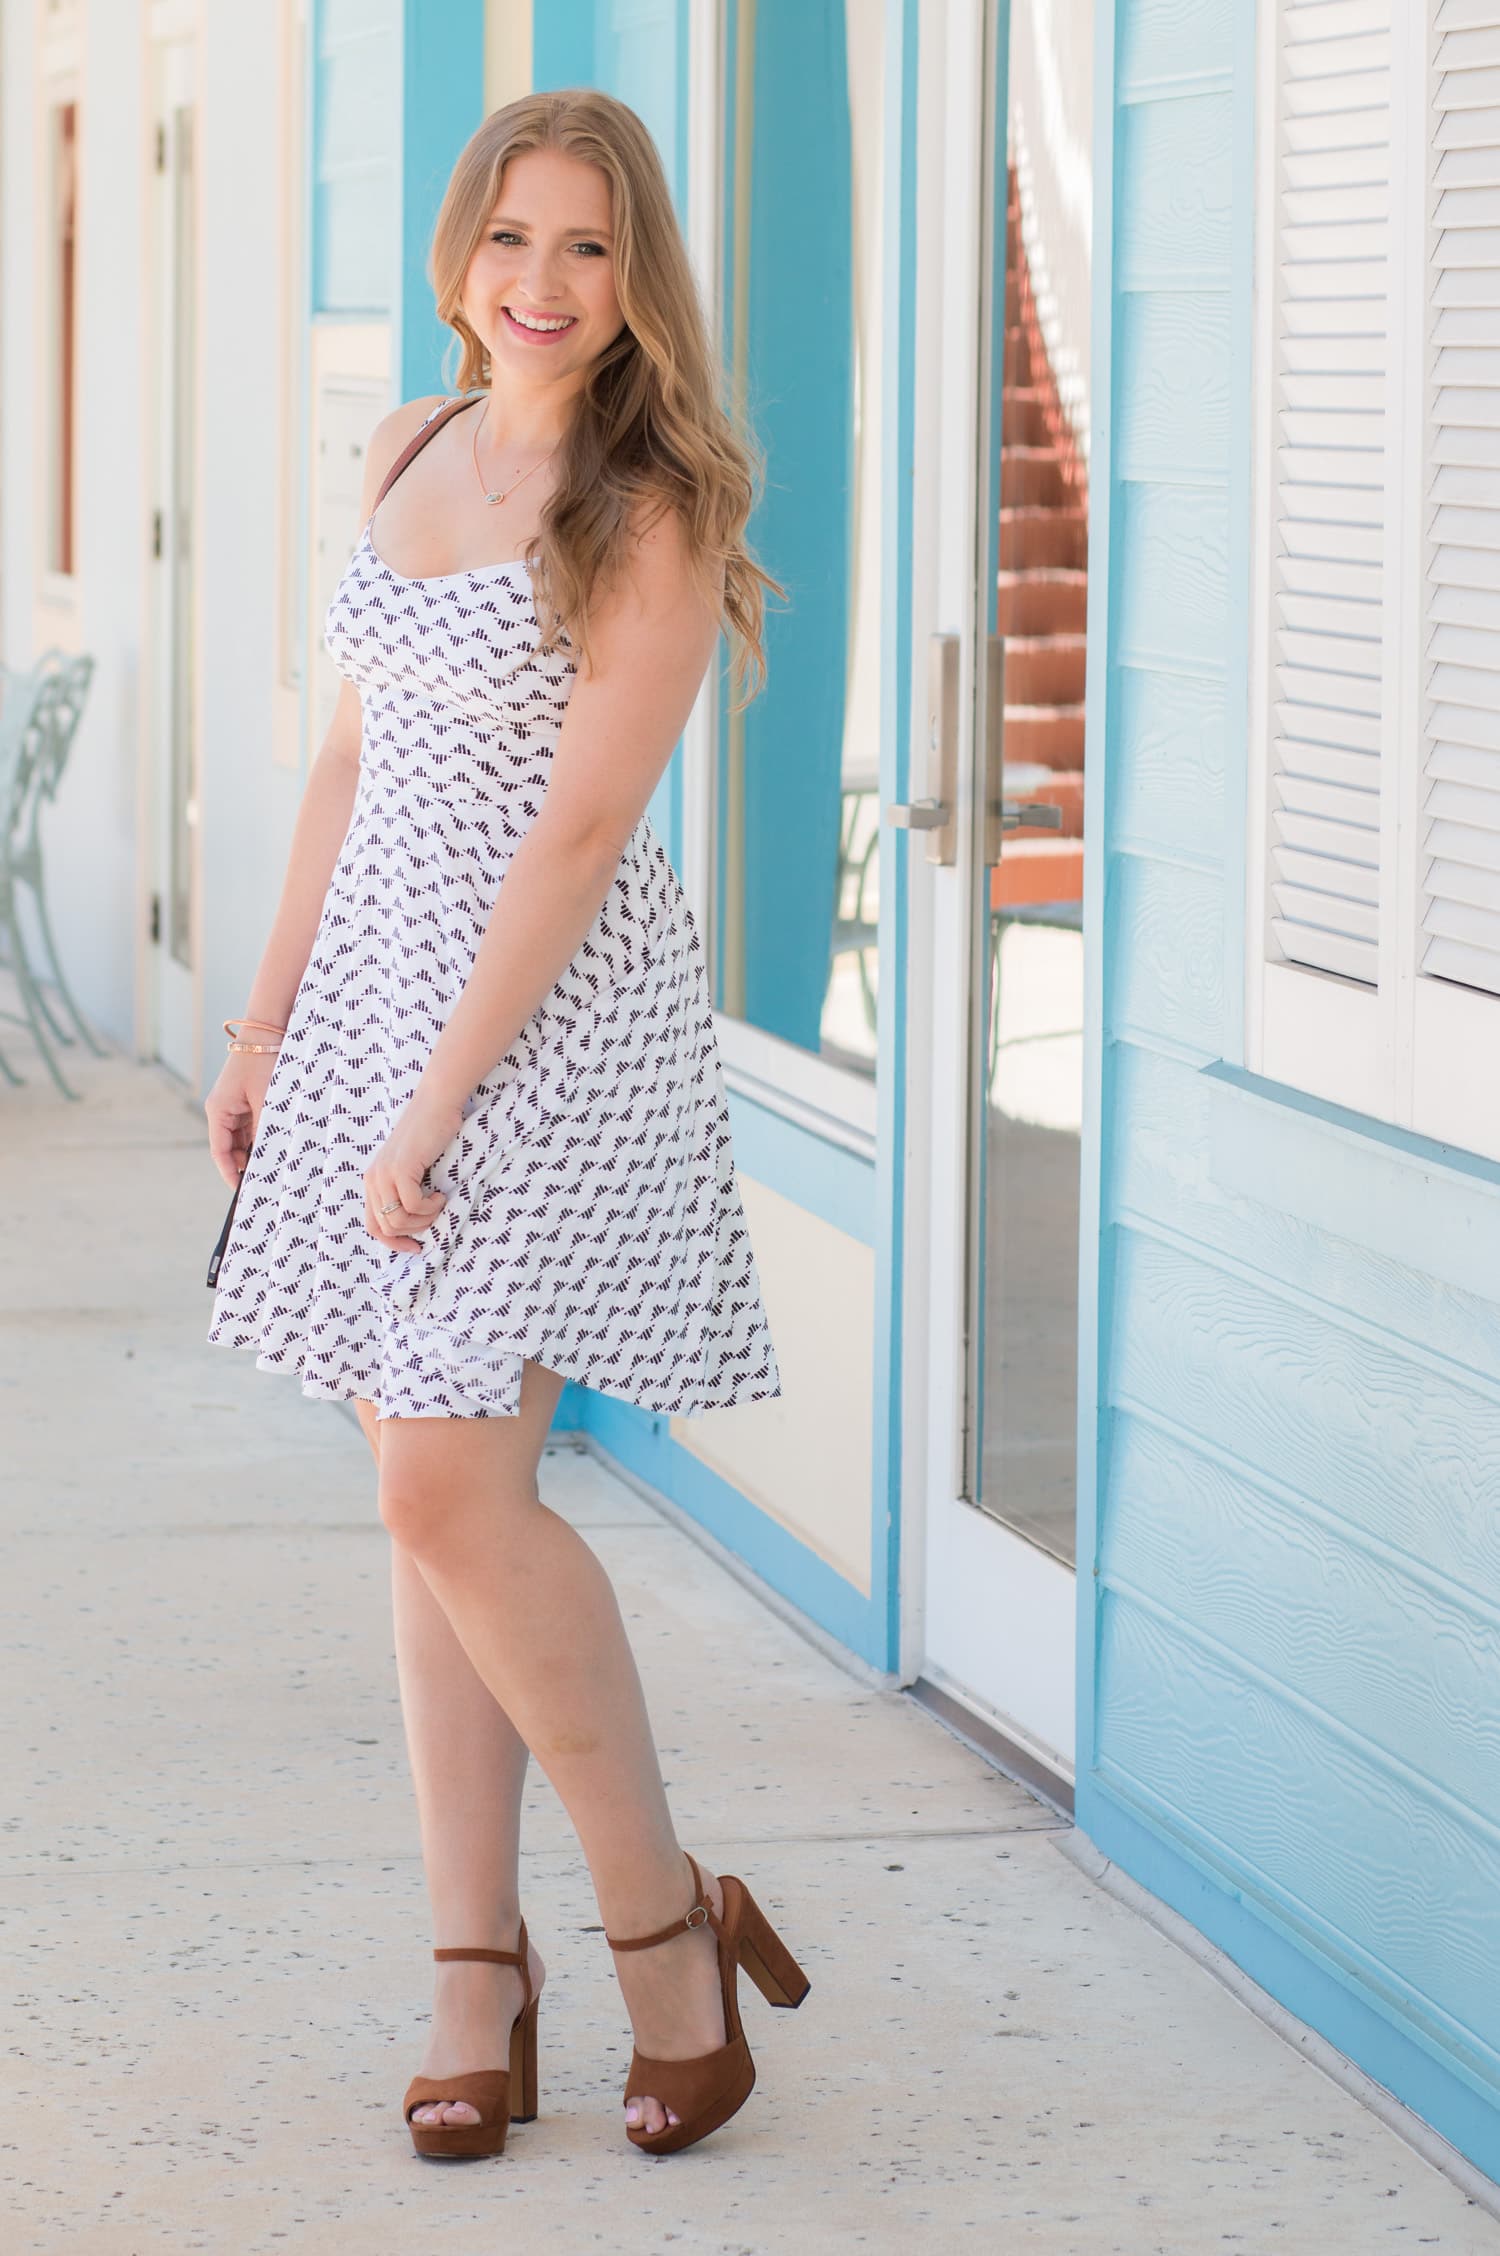 The perfect little sundress, Kendra Scott necklace, and tan platform heels | style blogger Ashley Brooke Nicholas